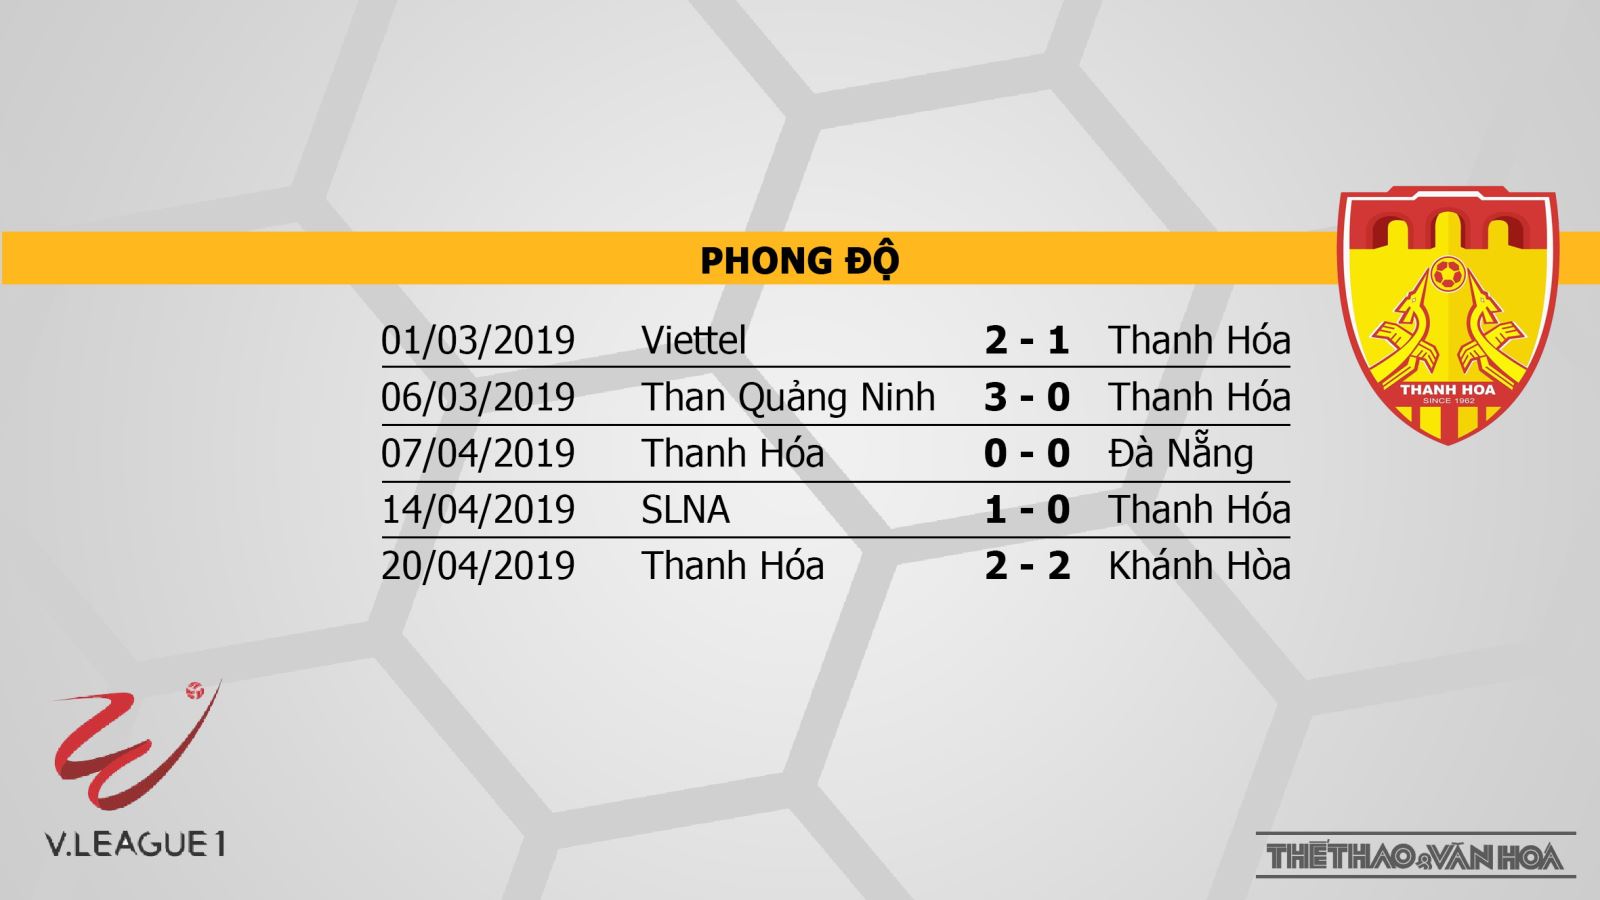 HAGL vs Thanh Hóa, Thanh Hóa, HAGL, truc tiep bong da, trực tiếp bóng đá, truc tiep HAGL, truc tiep HAGL vs Thanh Hóa, v league 2019, truc tiep v league, VTV6, BDTV, FPT